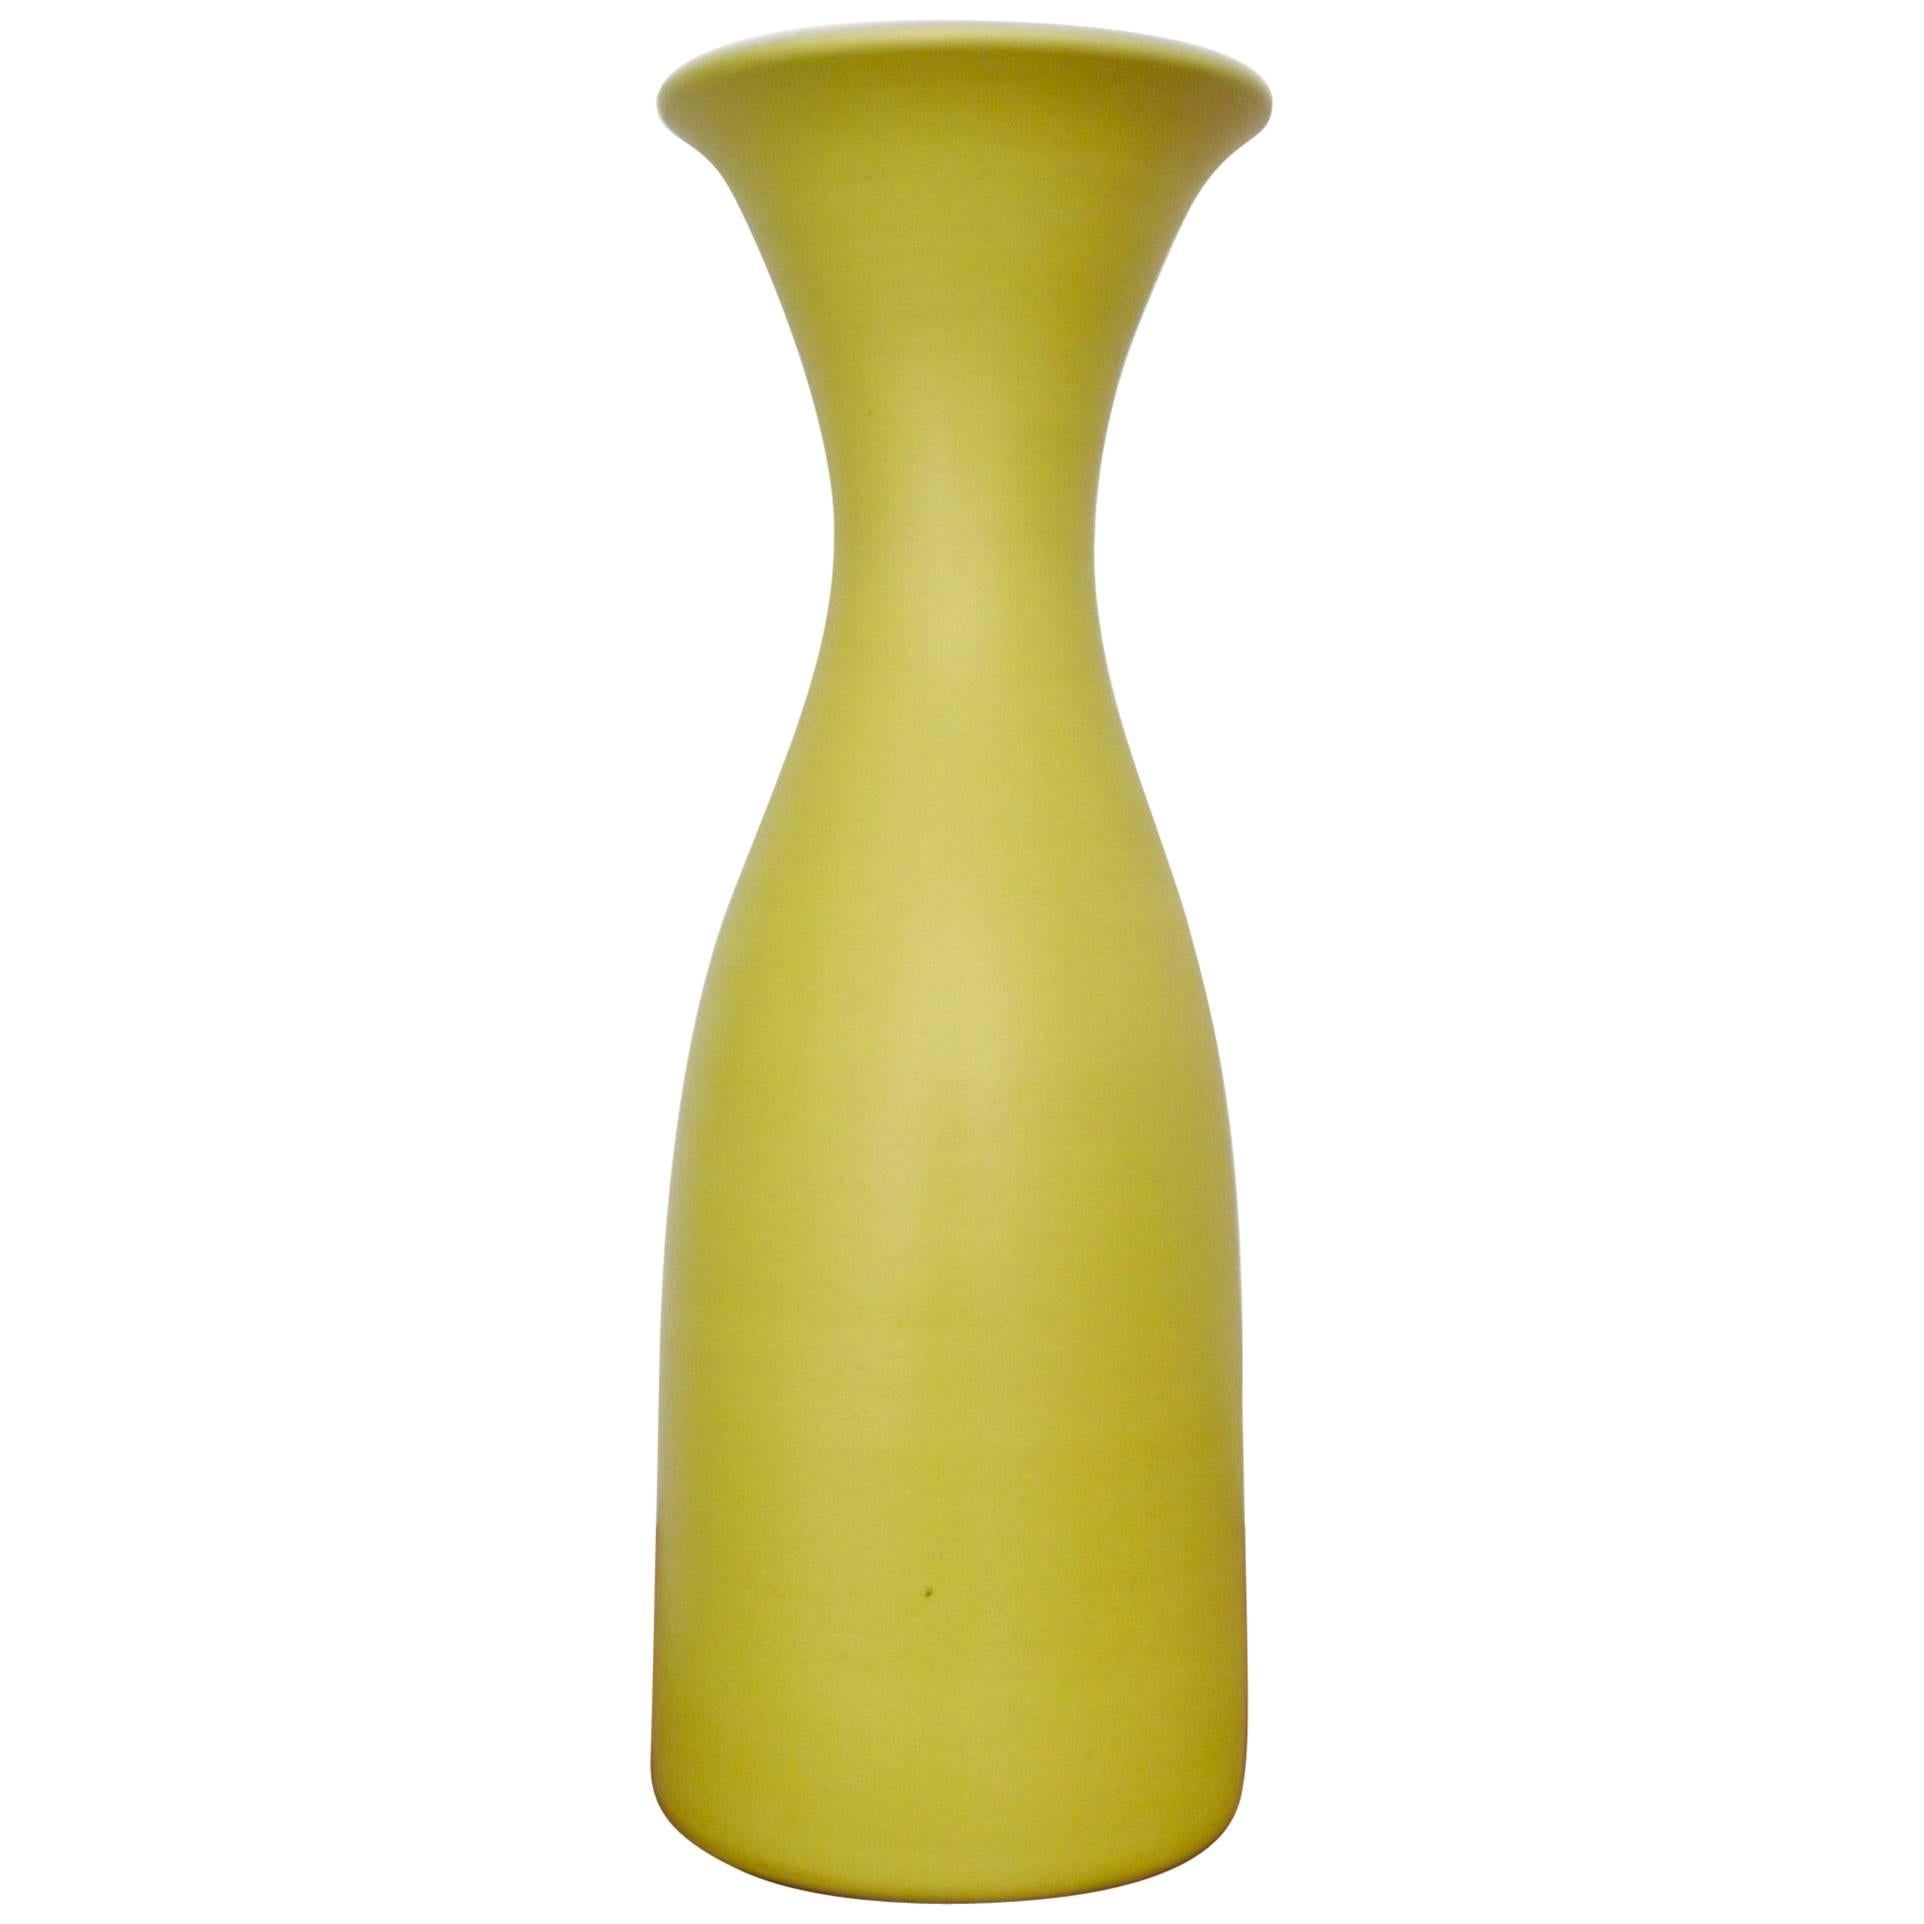 Pol Chambost Midcentury Ceramic Vase Model 1069, France, 1950s